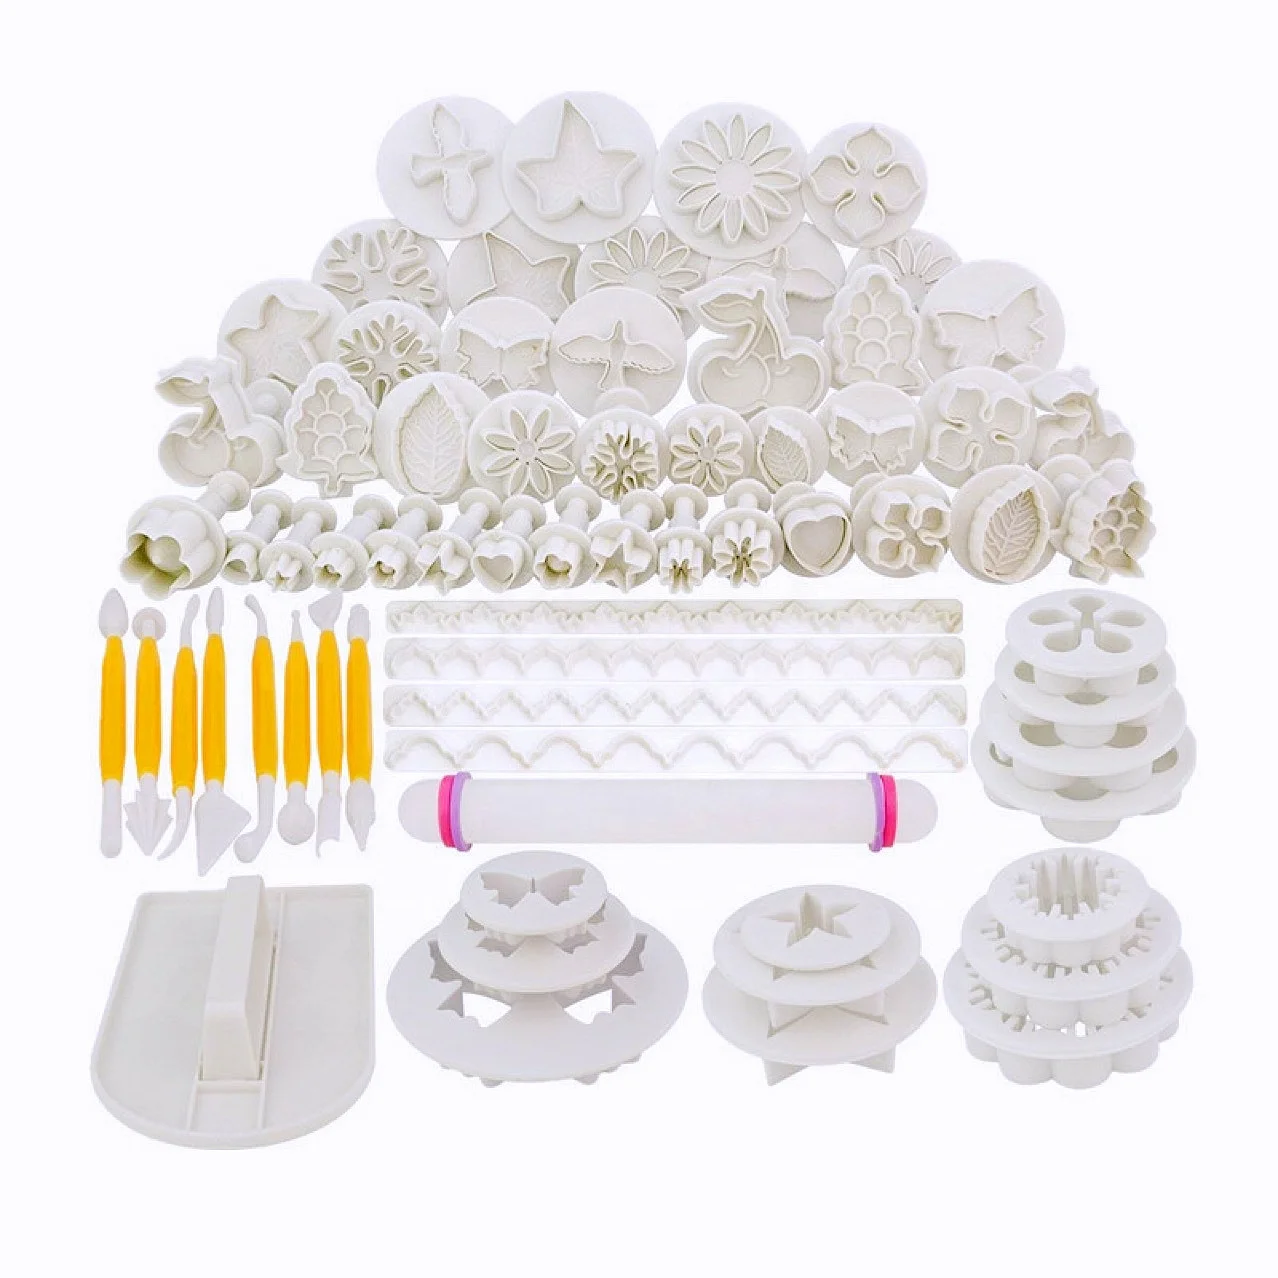 Baking accessories 68pcs wedding decoration set plastic miniatures cake tool mold for fondant decorate